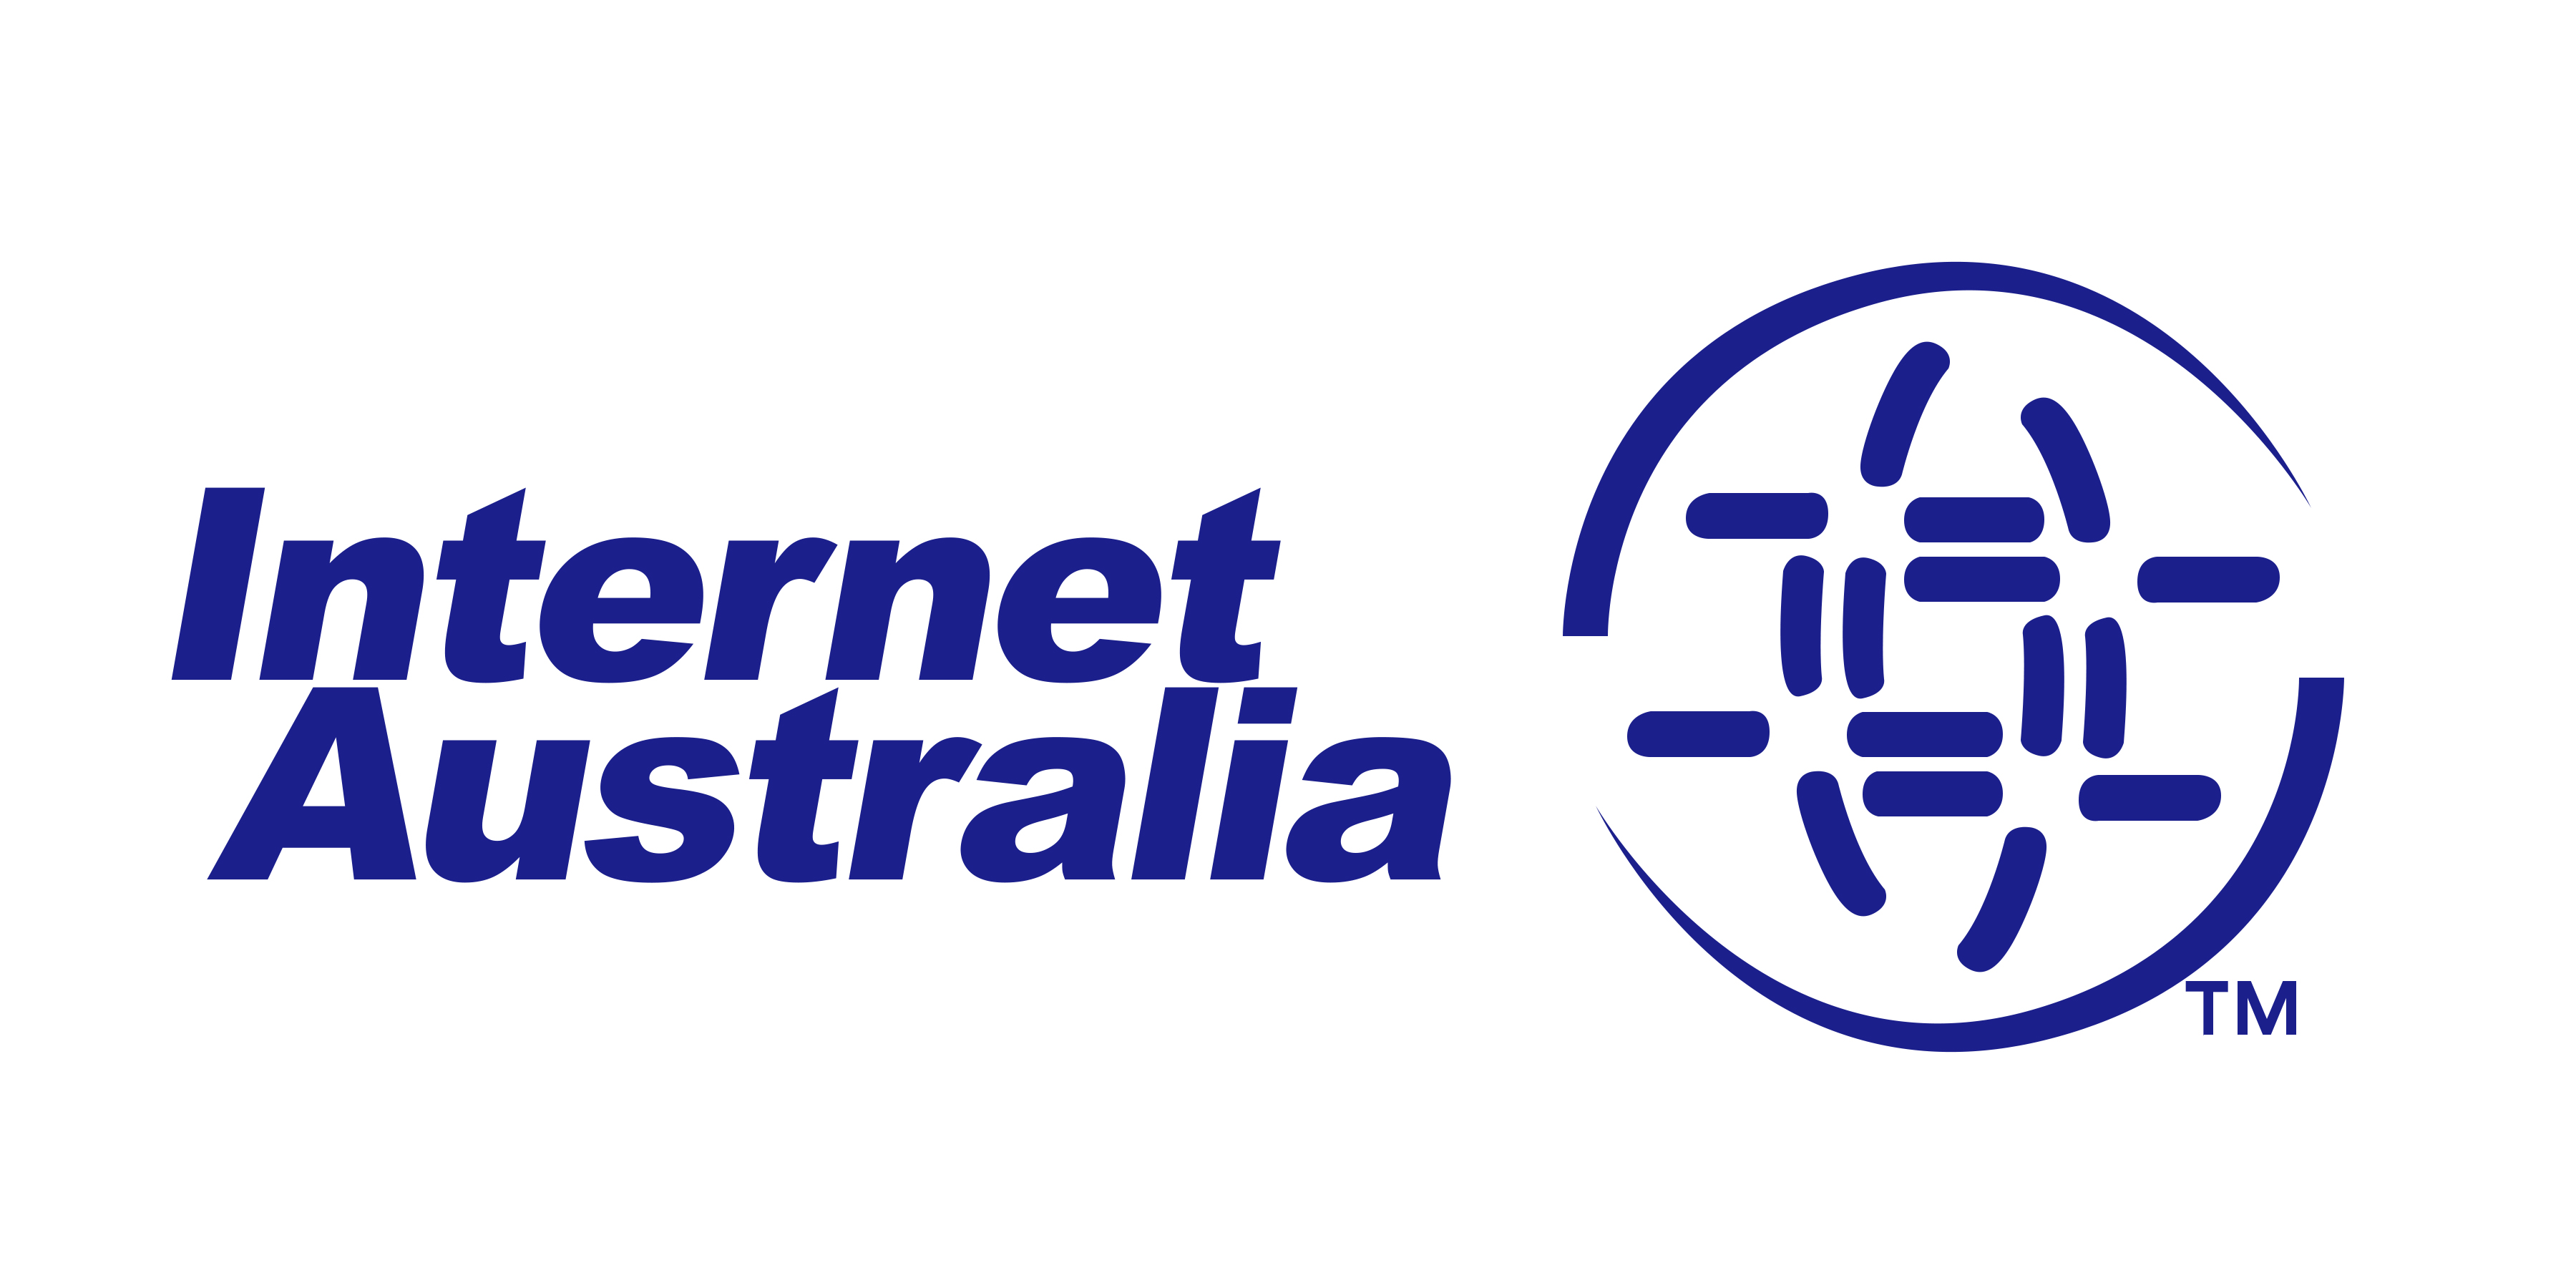 Internet Australia